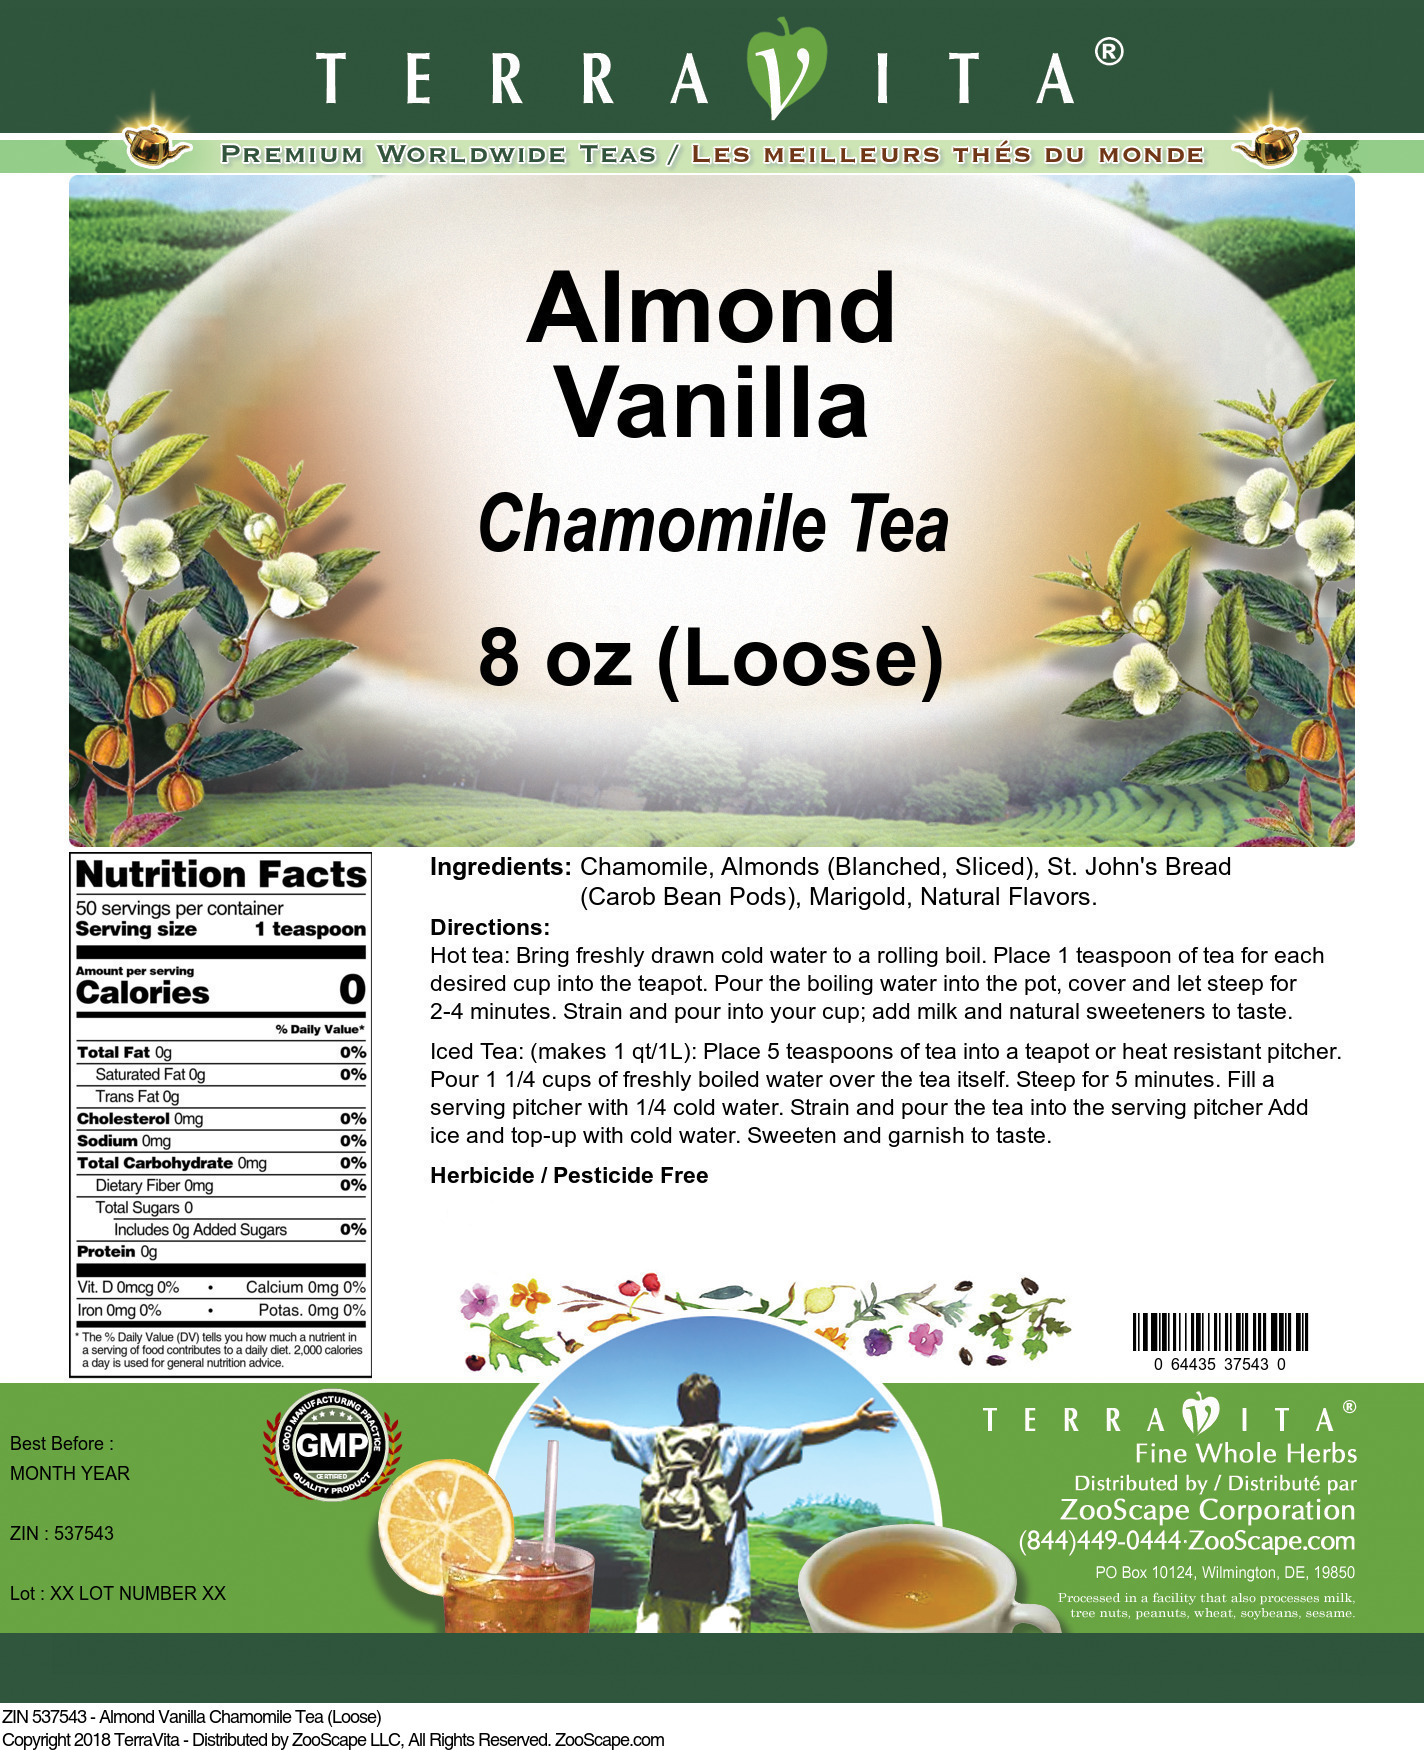 Almond Vanilla Chamomile Tea (Loose) - Label